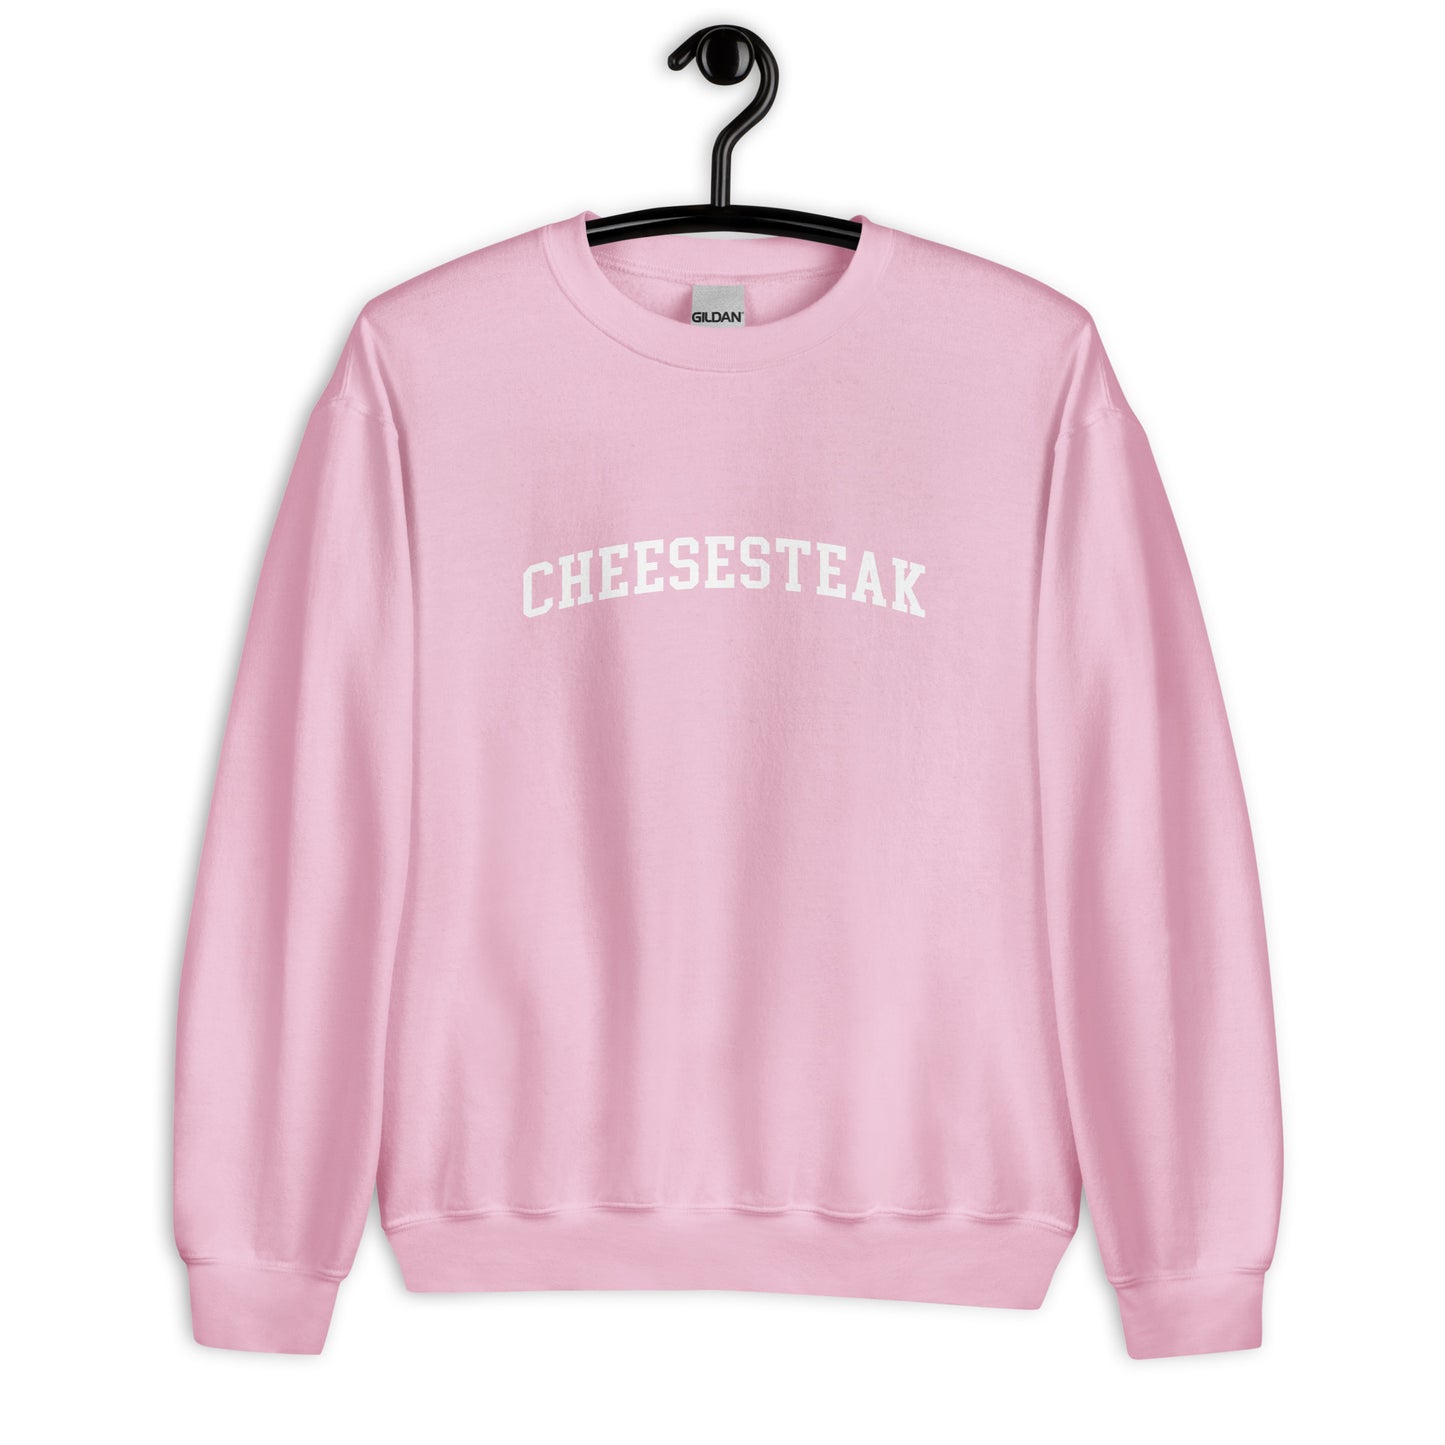 Cheesesteak Sweatshirt - Arched Font